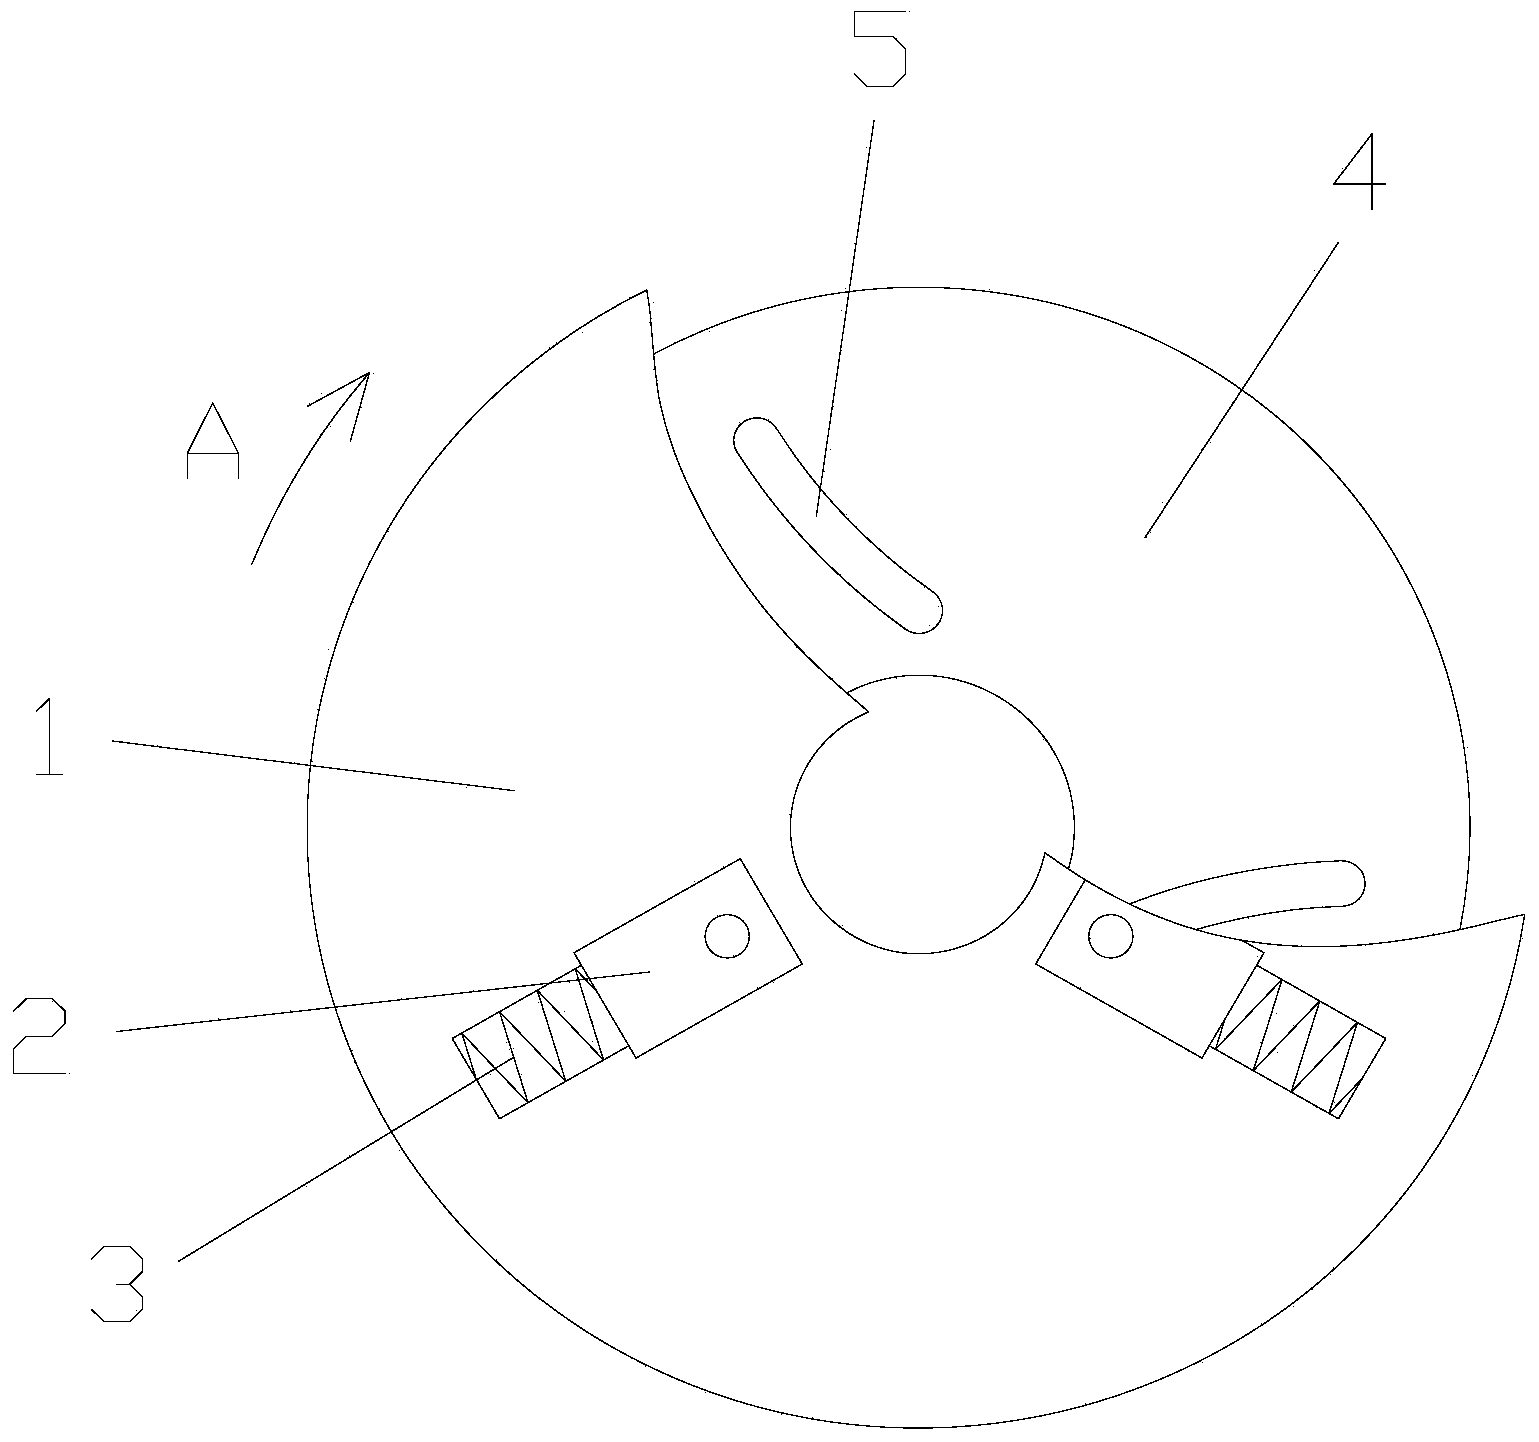 Flywheel with variable rotational inertia